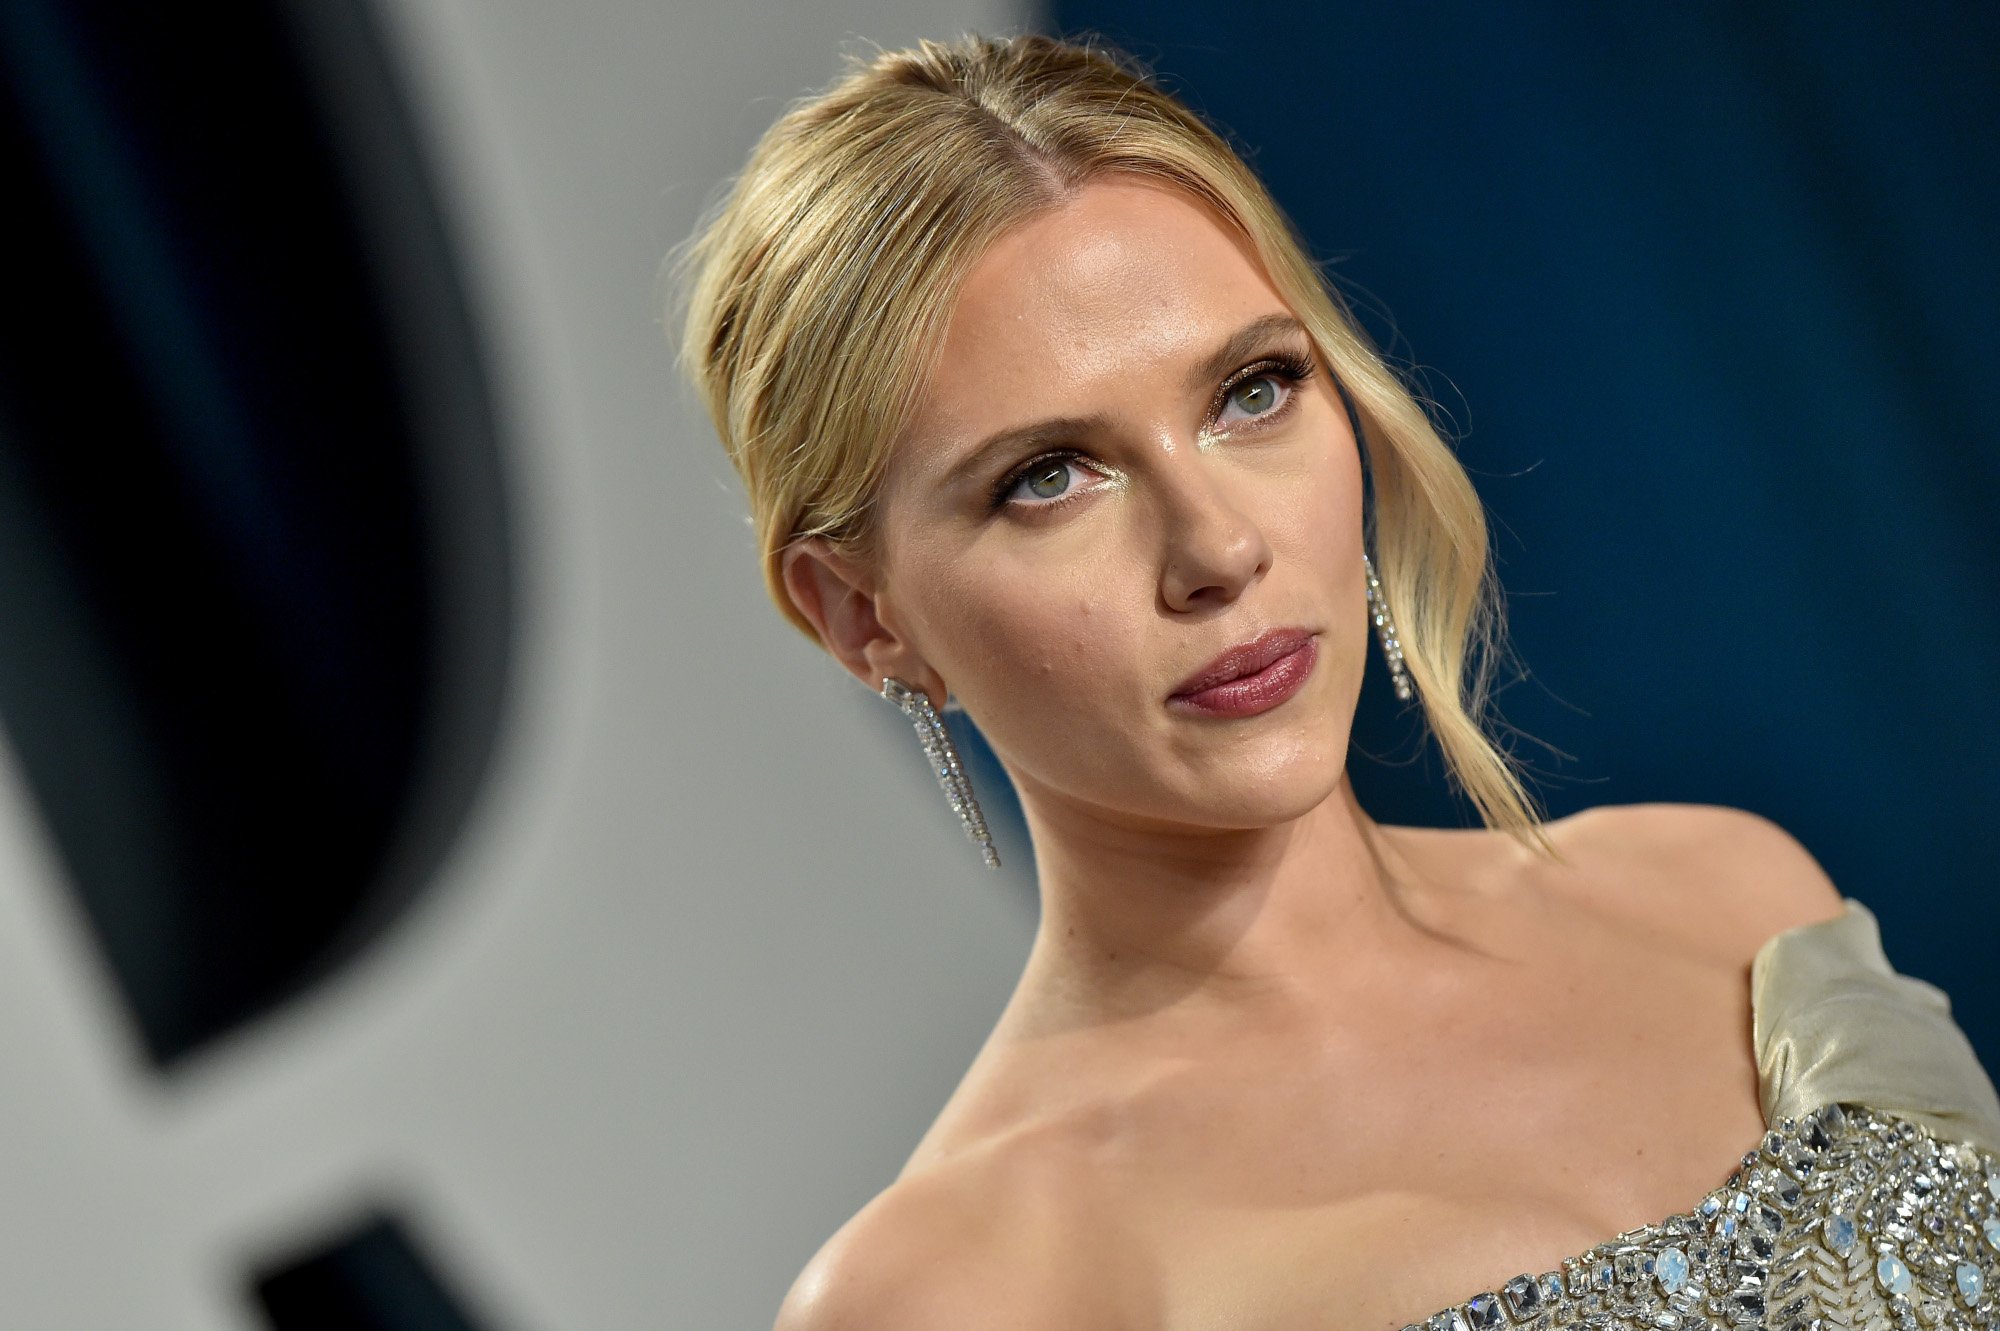 Scarlett Johansson wearing sequin dress during Oscars party